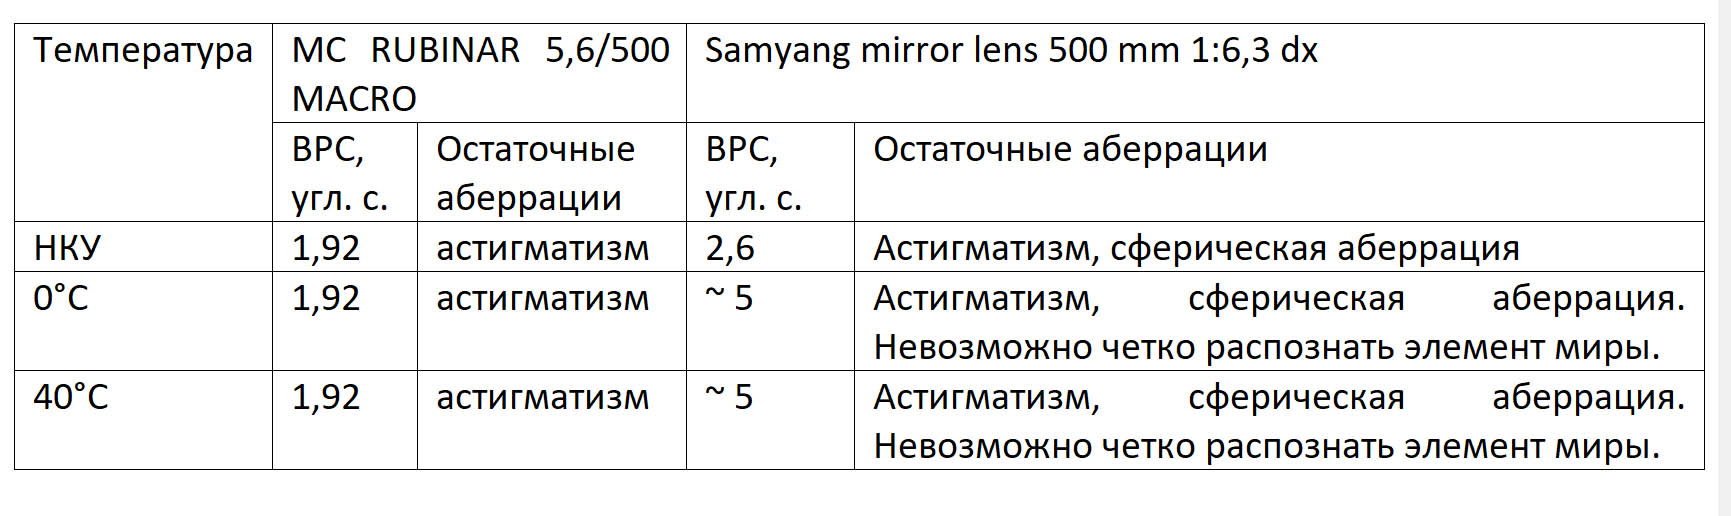 samyang-espejo-lente-500-mm-6-3-dx-lente-3